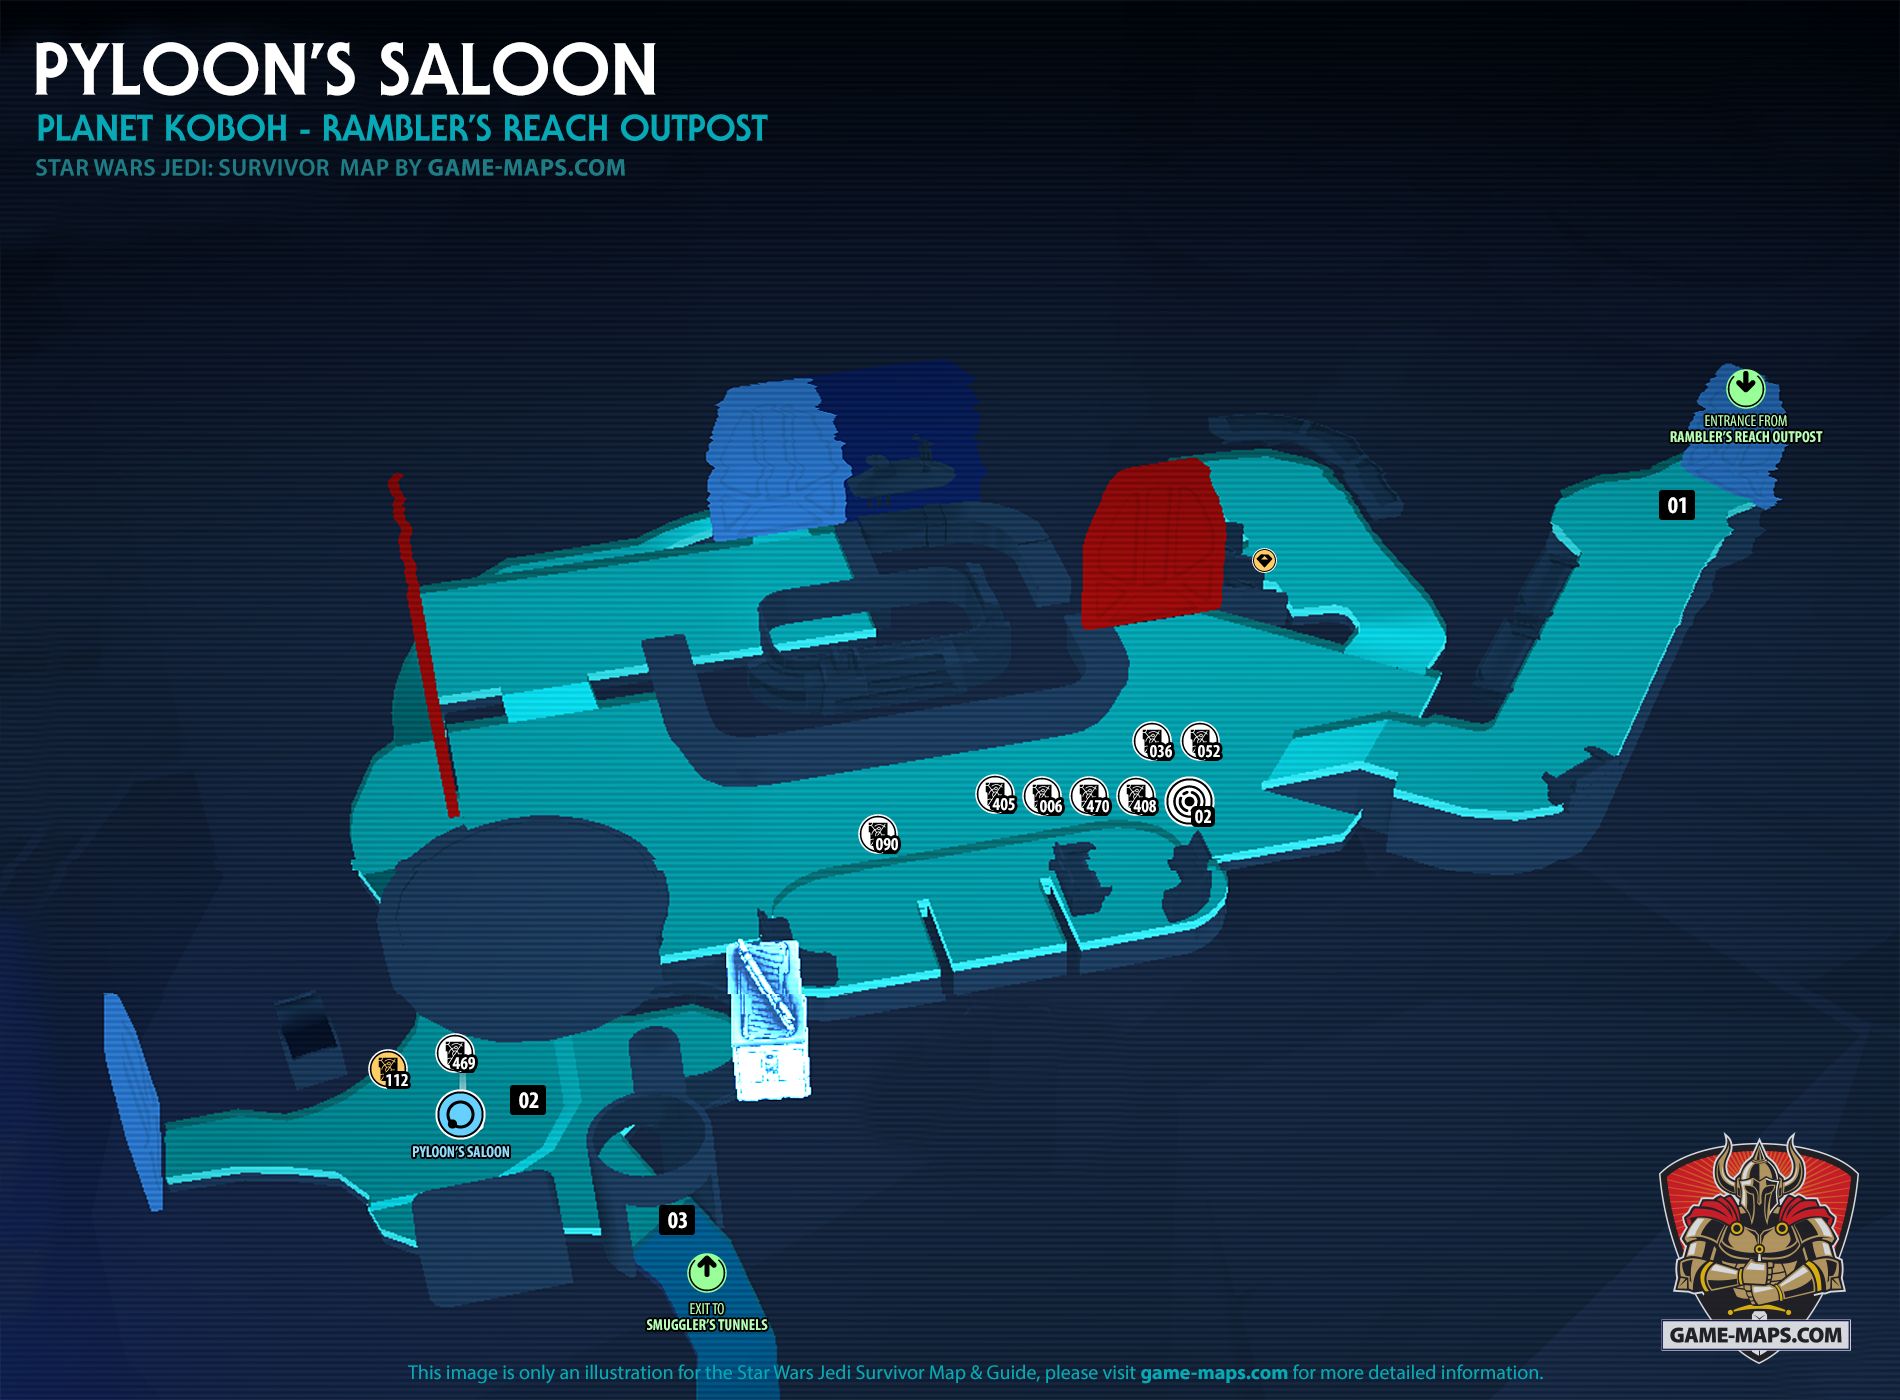 Pyloon’s Saloon Map Jedi Survivor